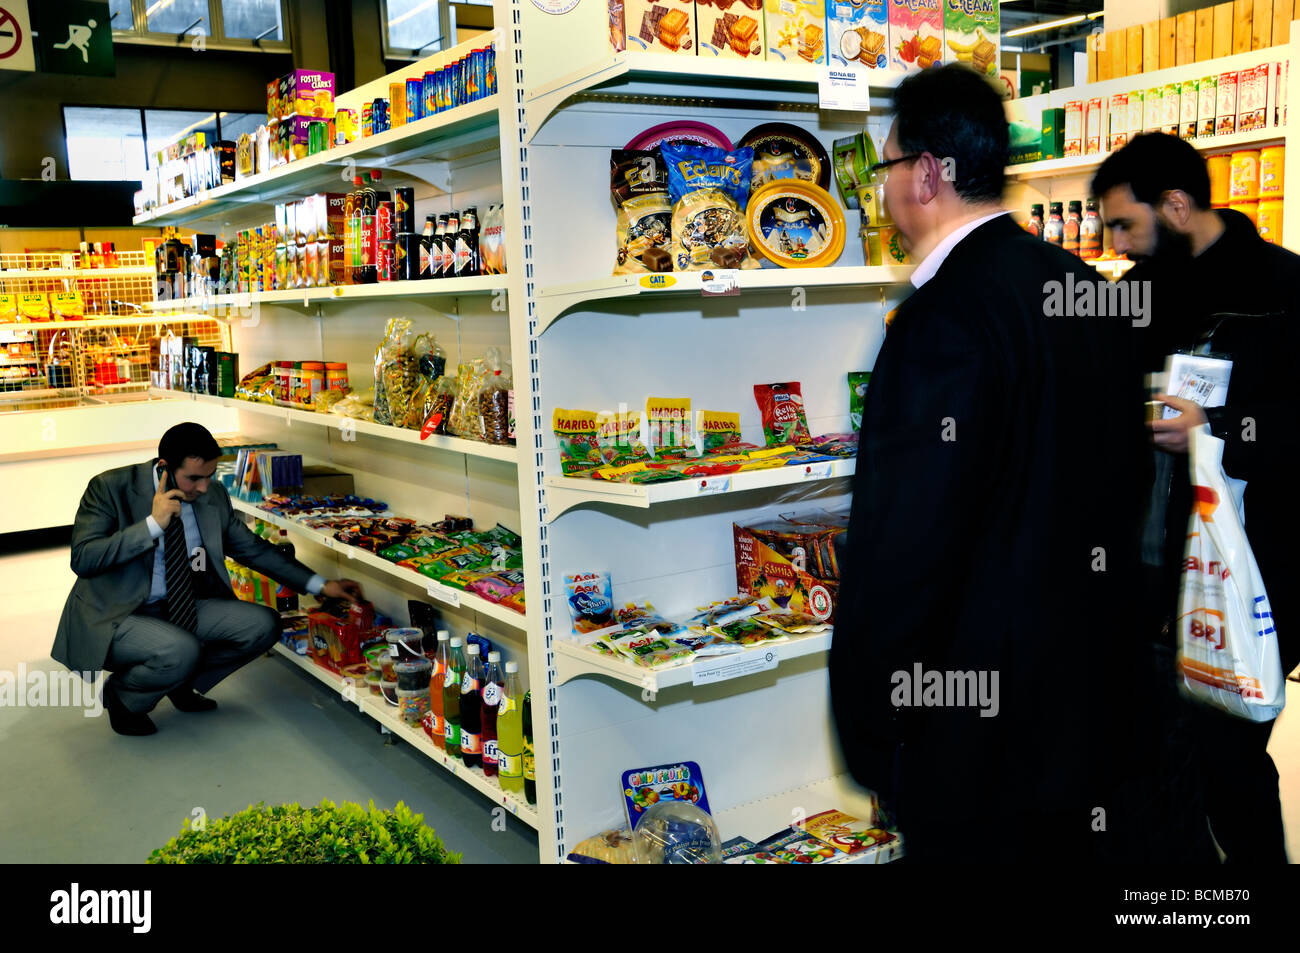 , vista interna di supermarketPARIS FRANCE, 'etnic Food' Store Shelves Arabian 'Halal Foods' Man shopping, Shopper scegliendo merci in locale Foto Stock